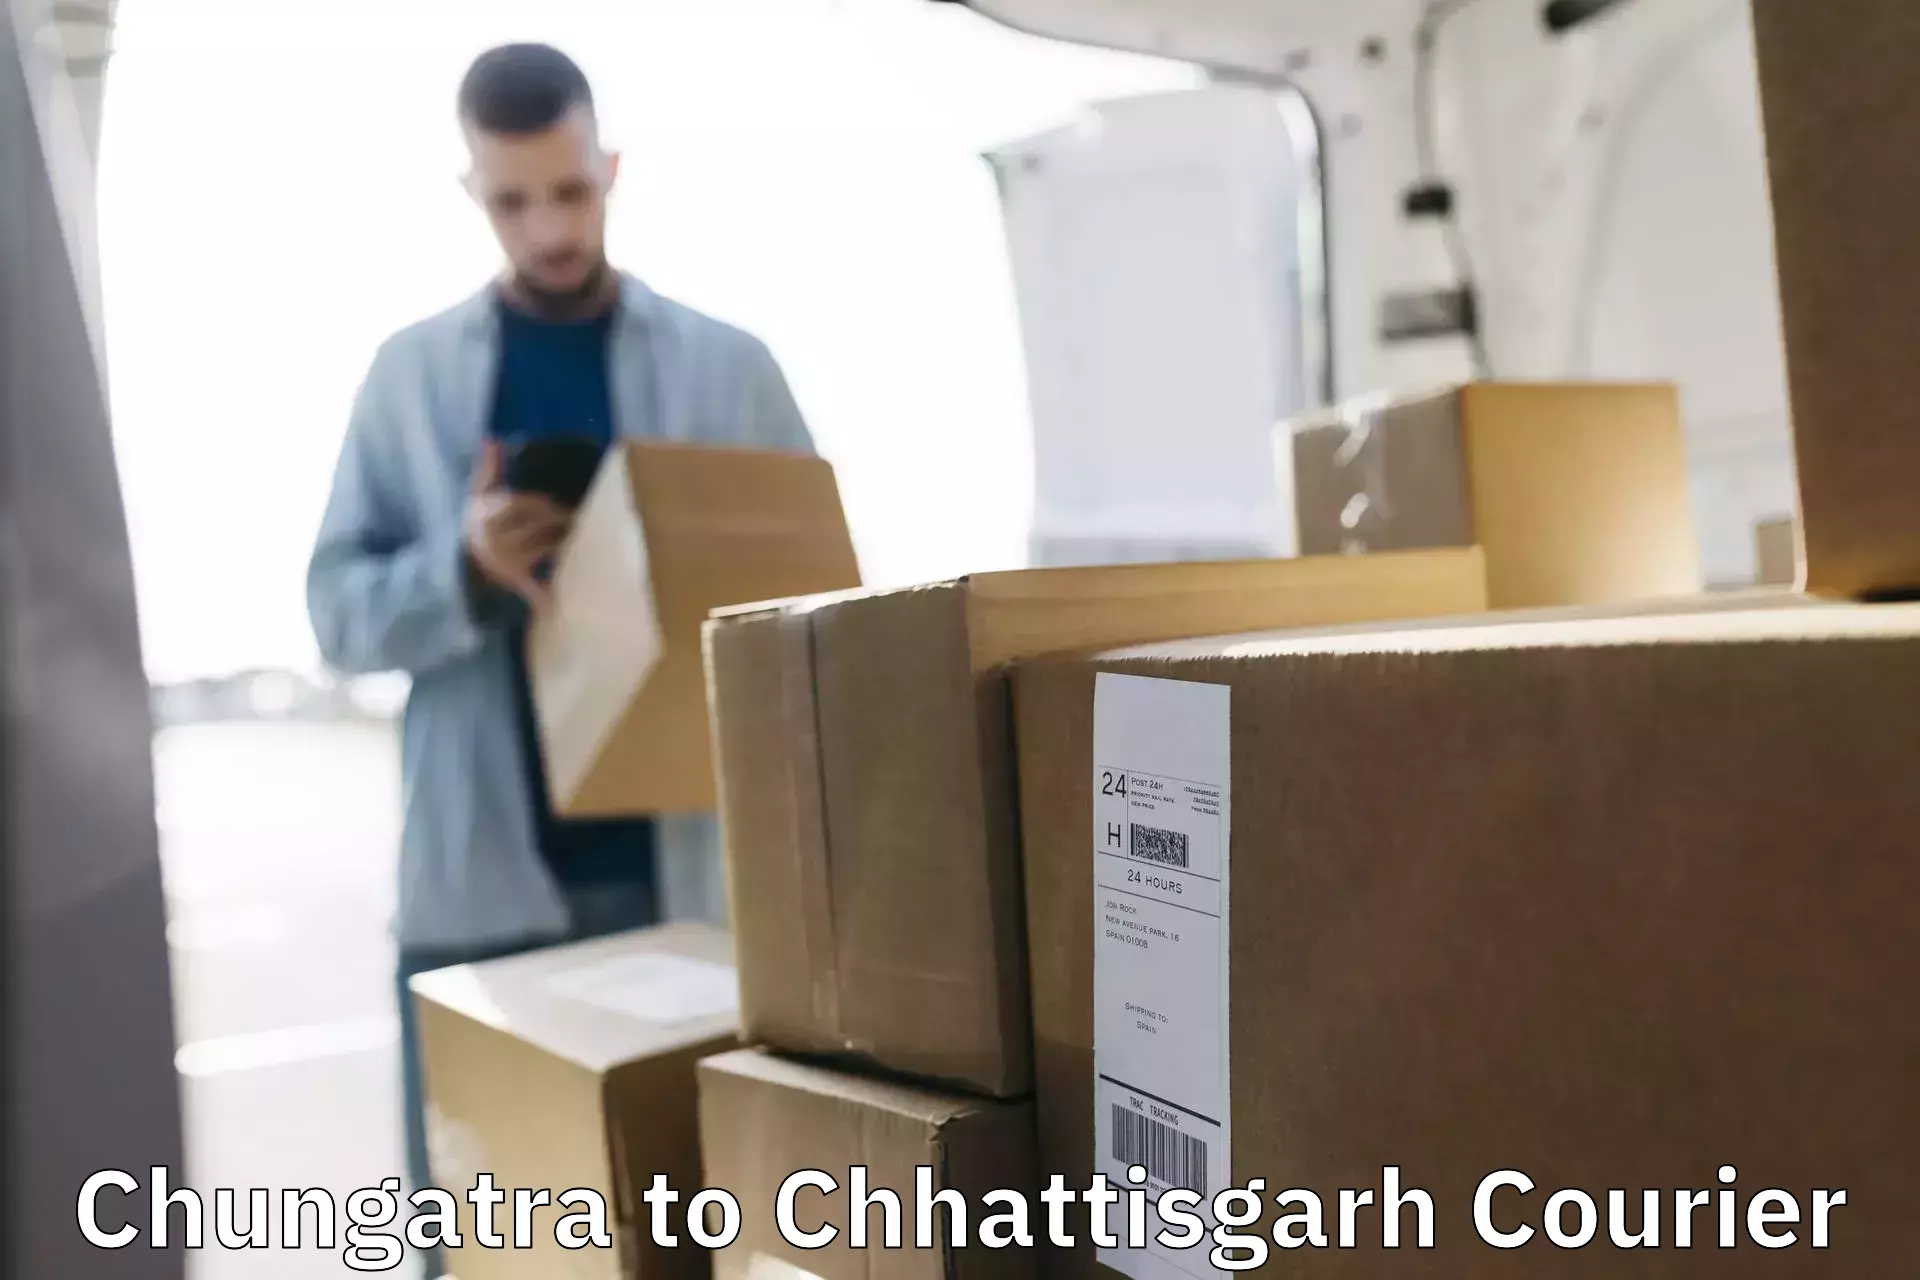 Express delivery network Chungatra to Korea Chhattisgarh